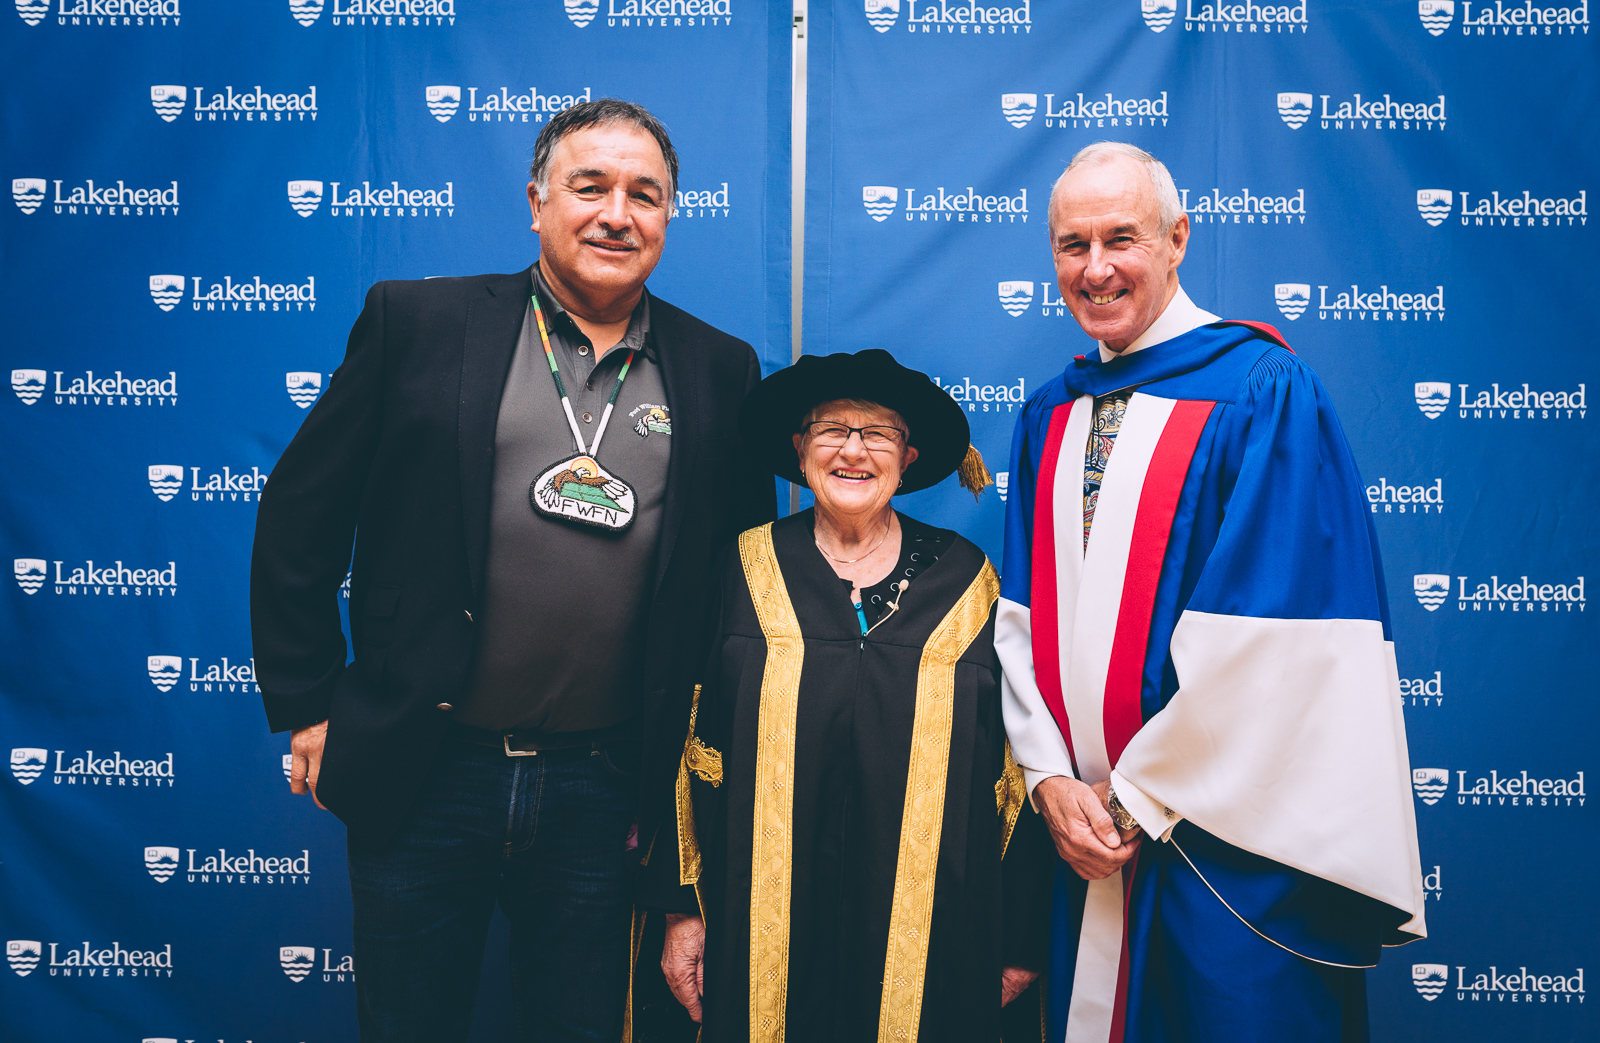 lakehead-university-president-2018-blog-10.jpg